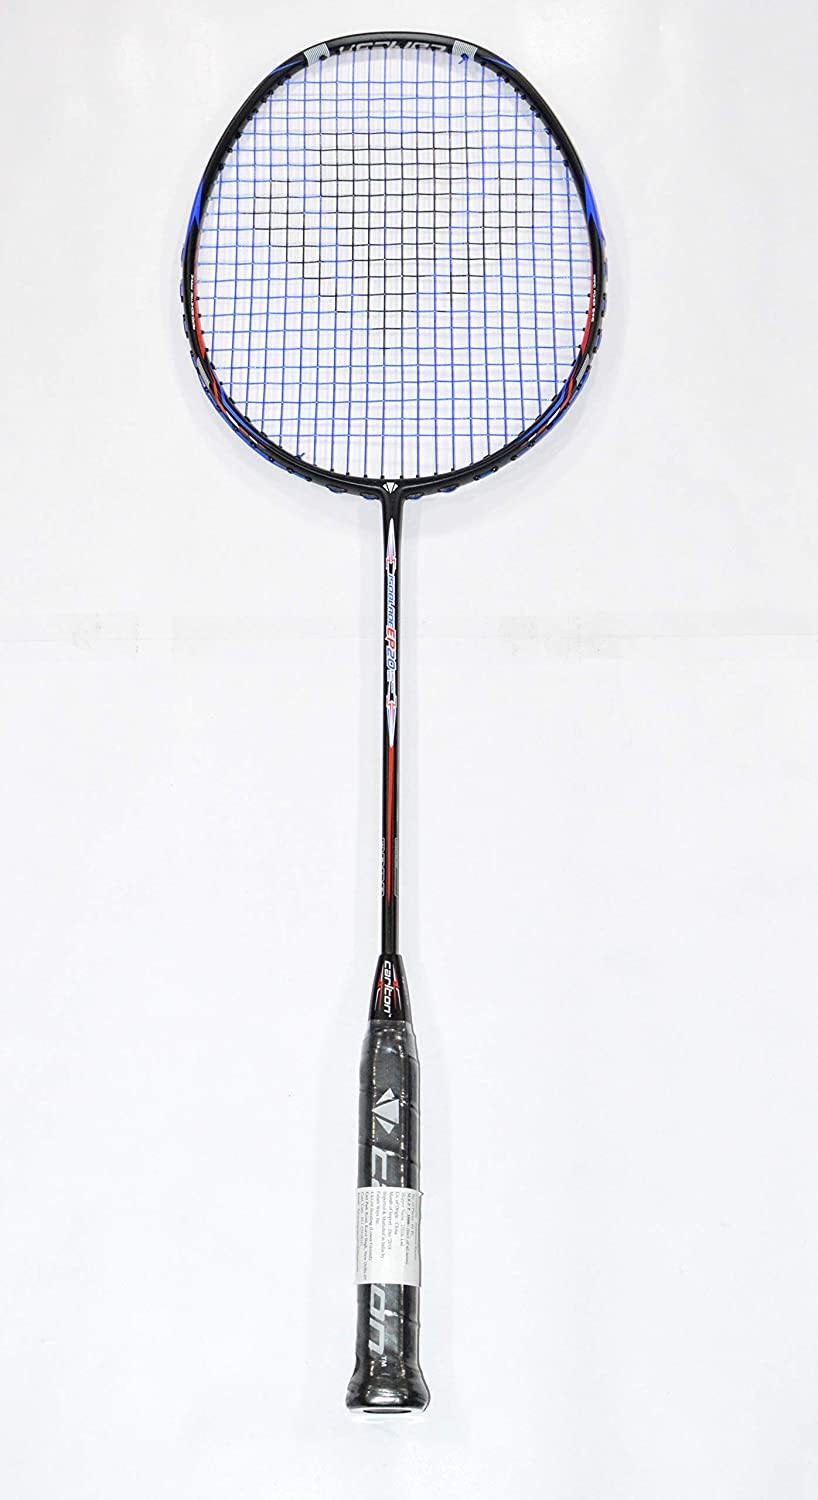 Carlton Isoblade EP20 Badminton Racket - Best Price online Prokicksports.com